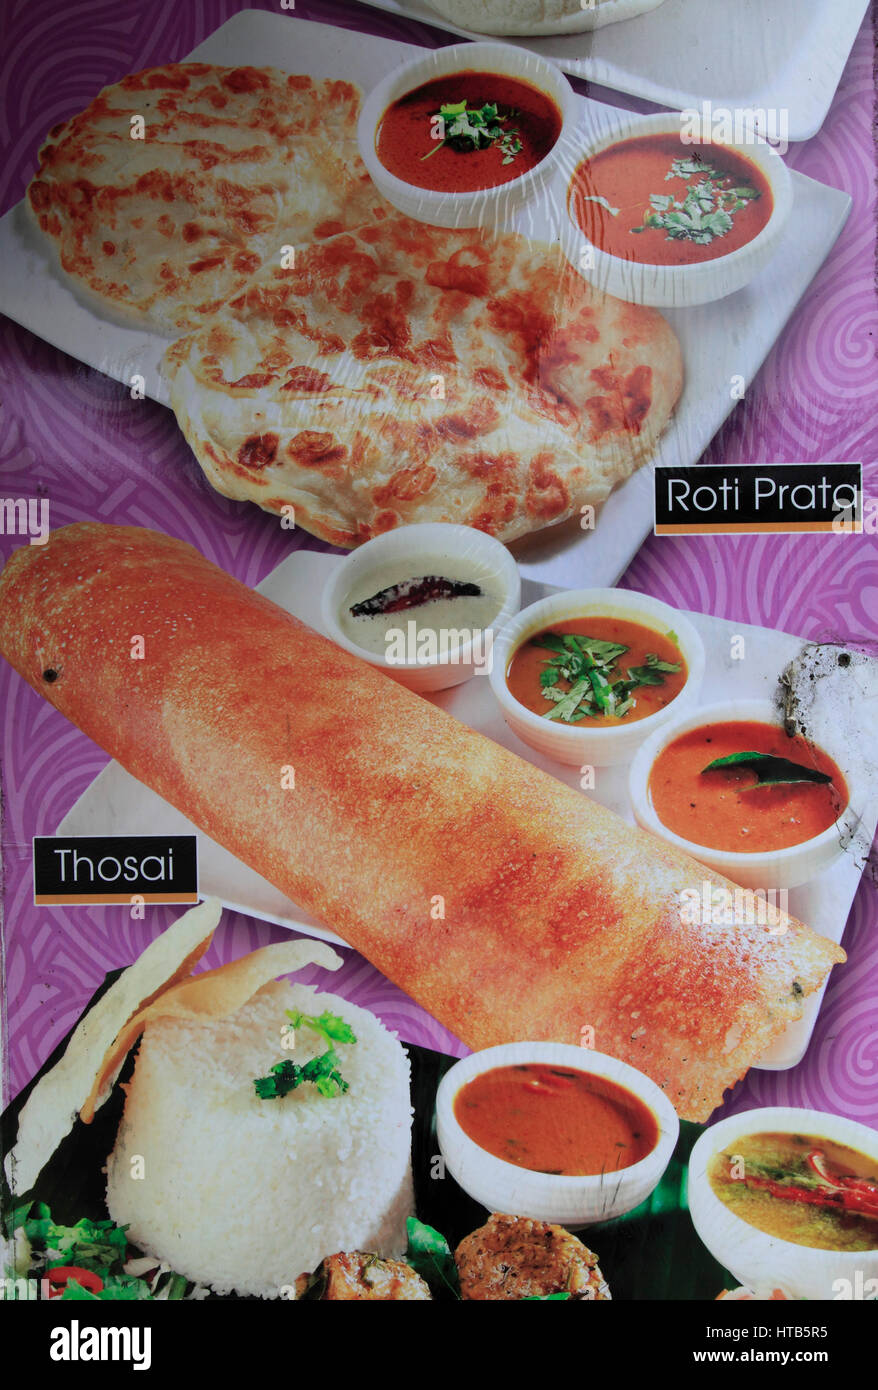 Singapore, Indian restaurant, menu items, Roti Prata, Thosai, Stock Photo